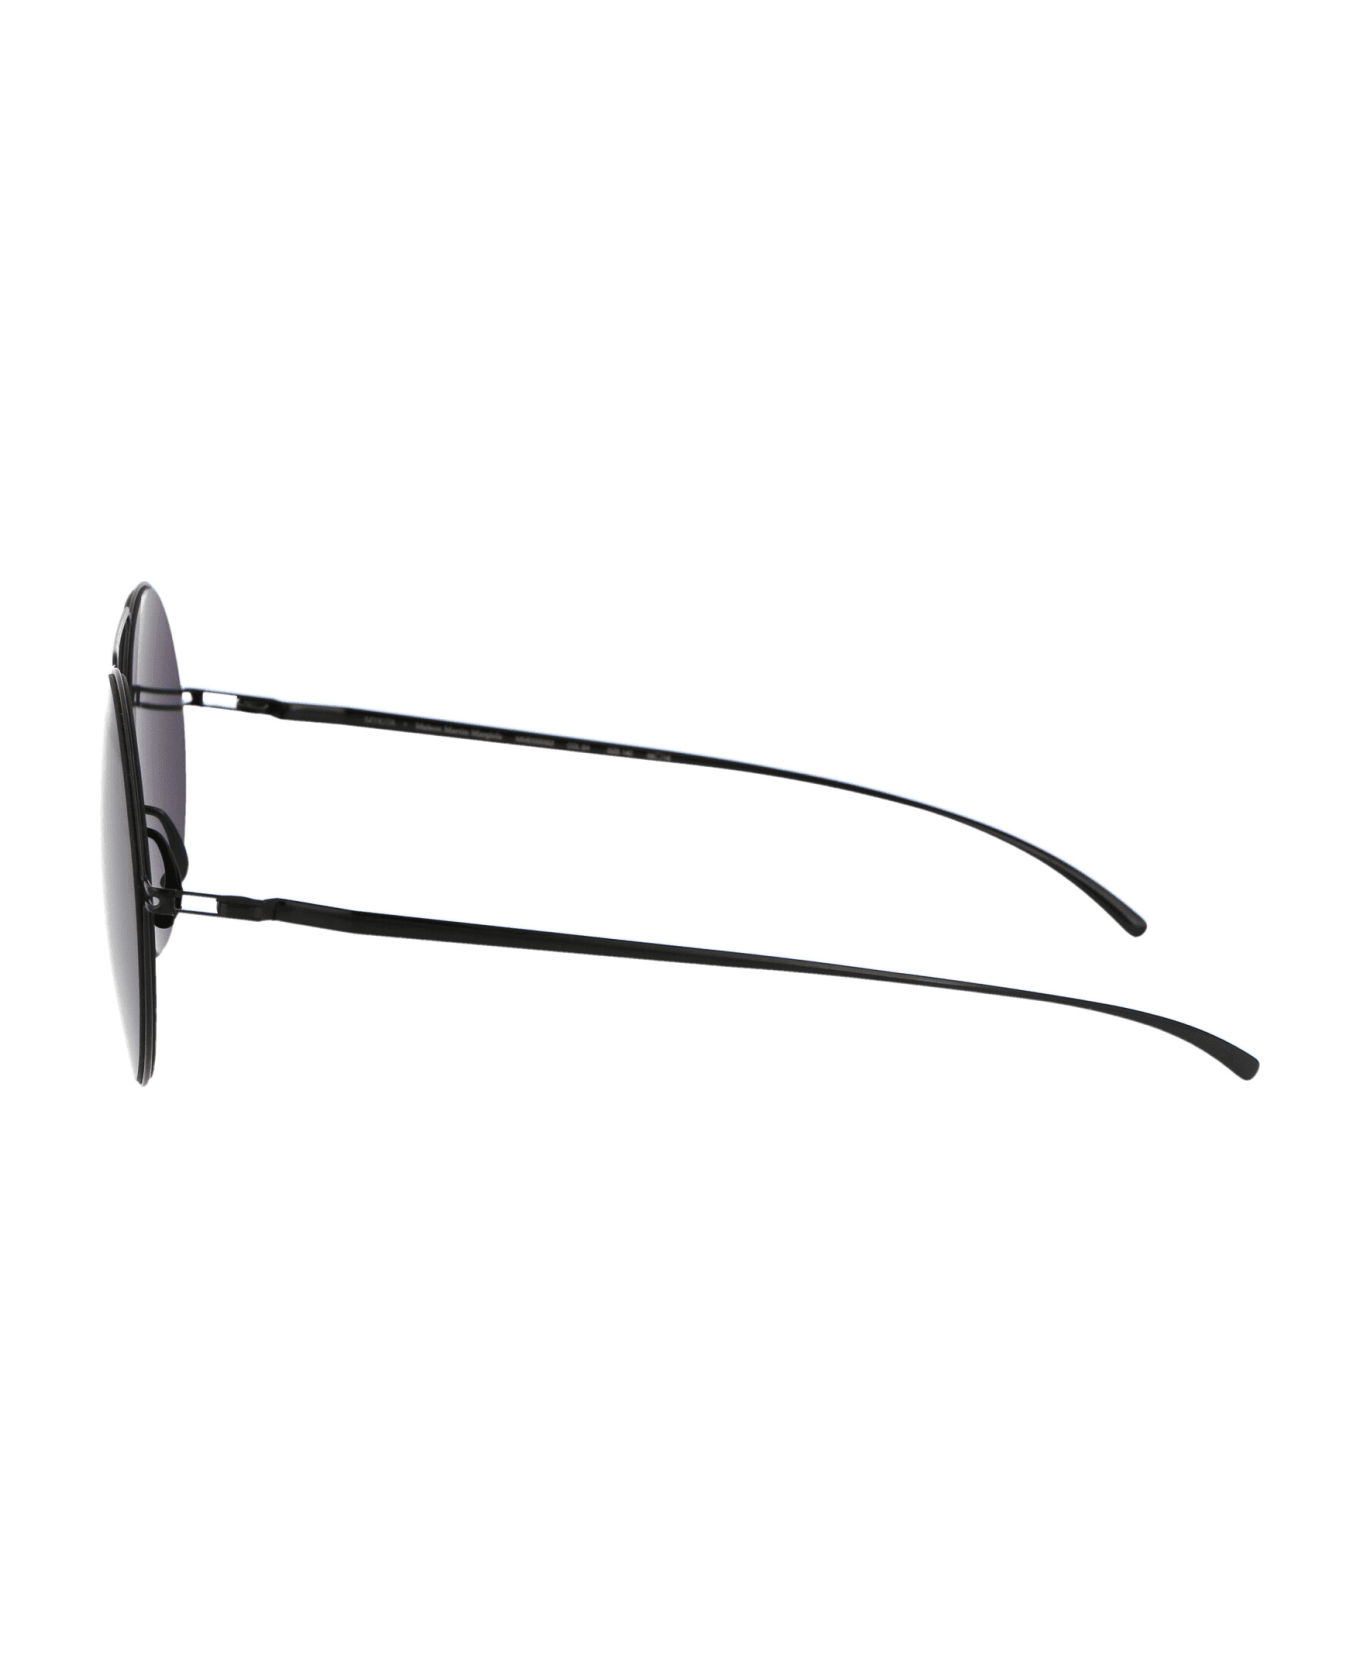 Mykita Mmesse003 Sunglasses - 190 E4 Black Dark Grey Solid